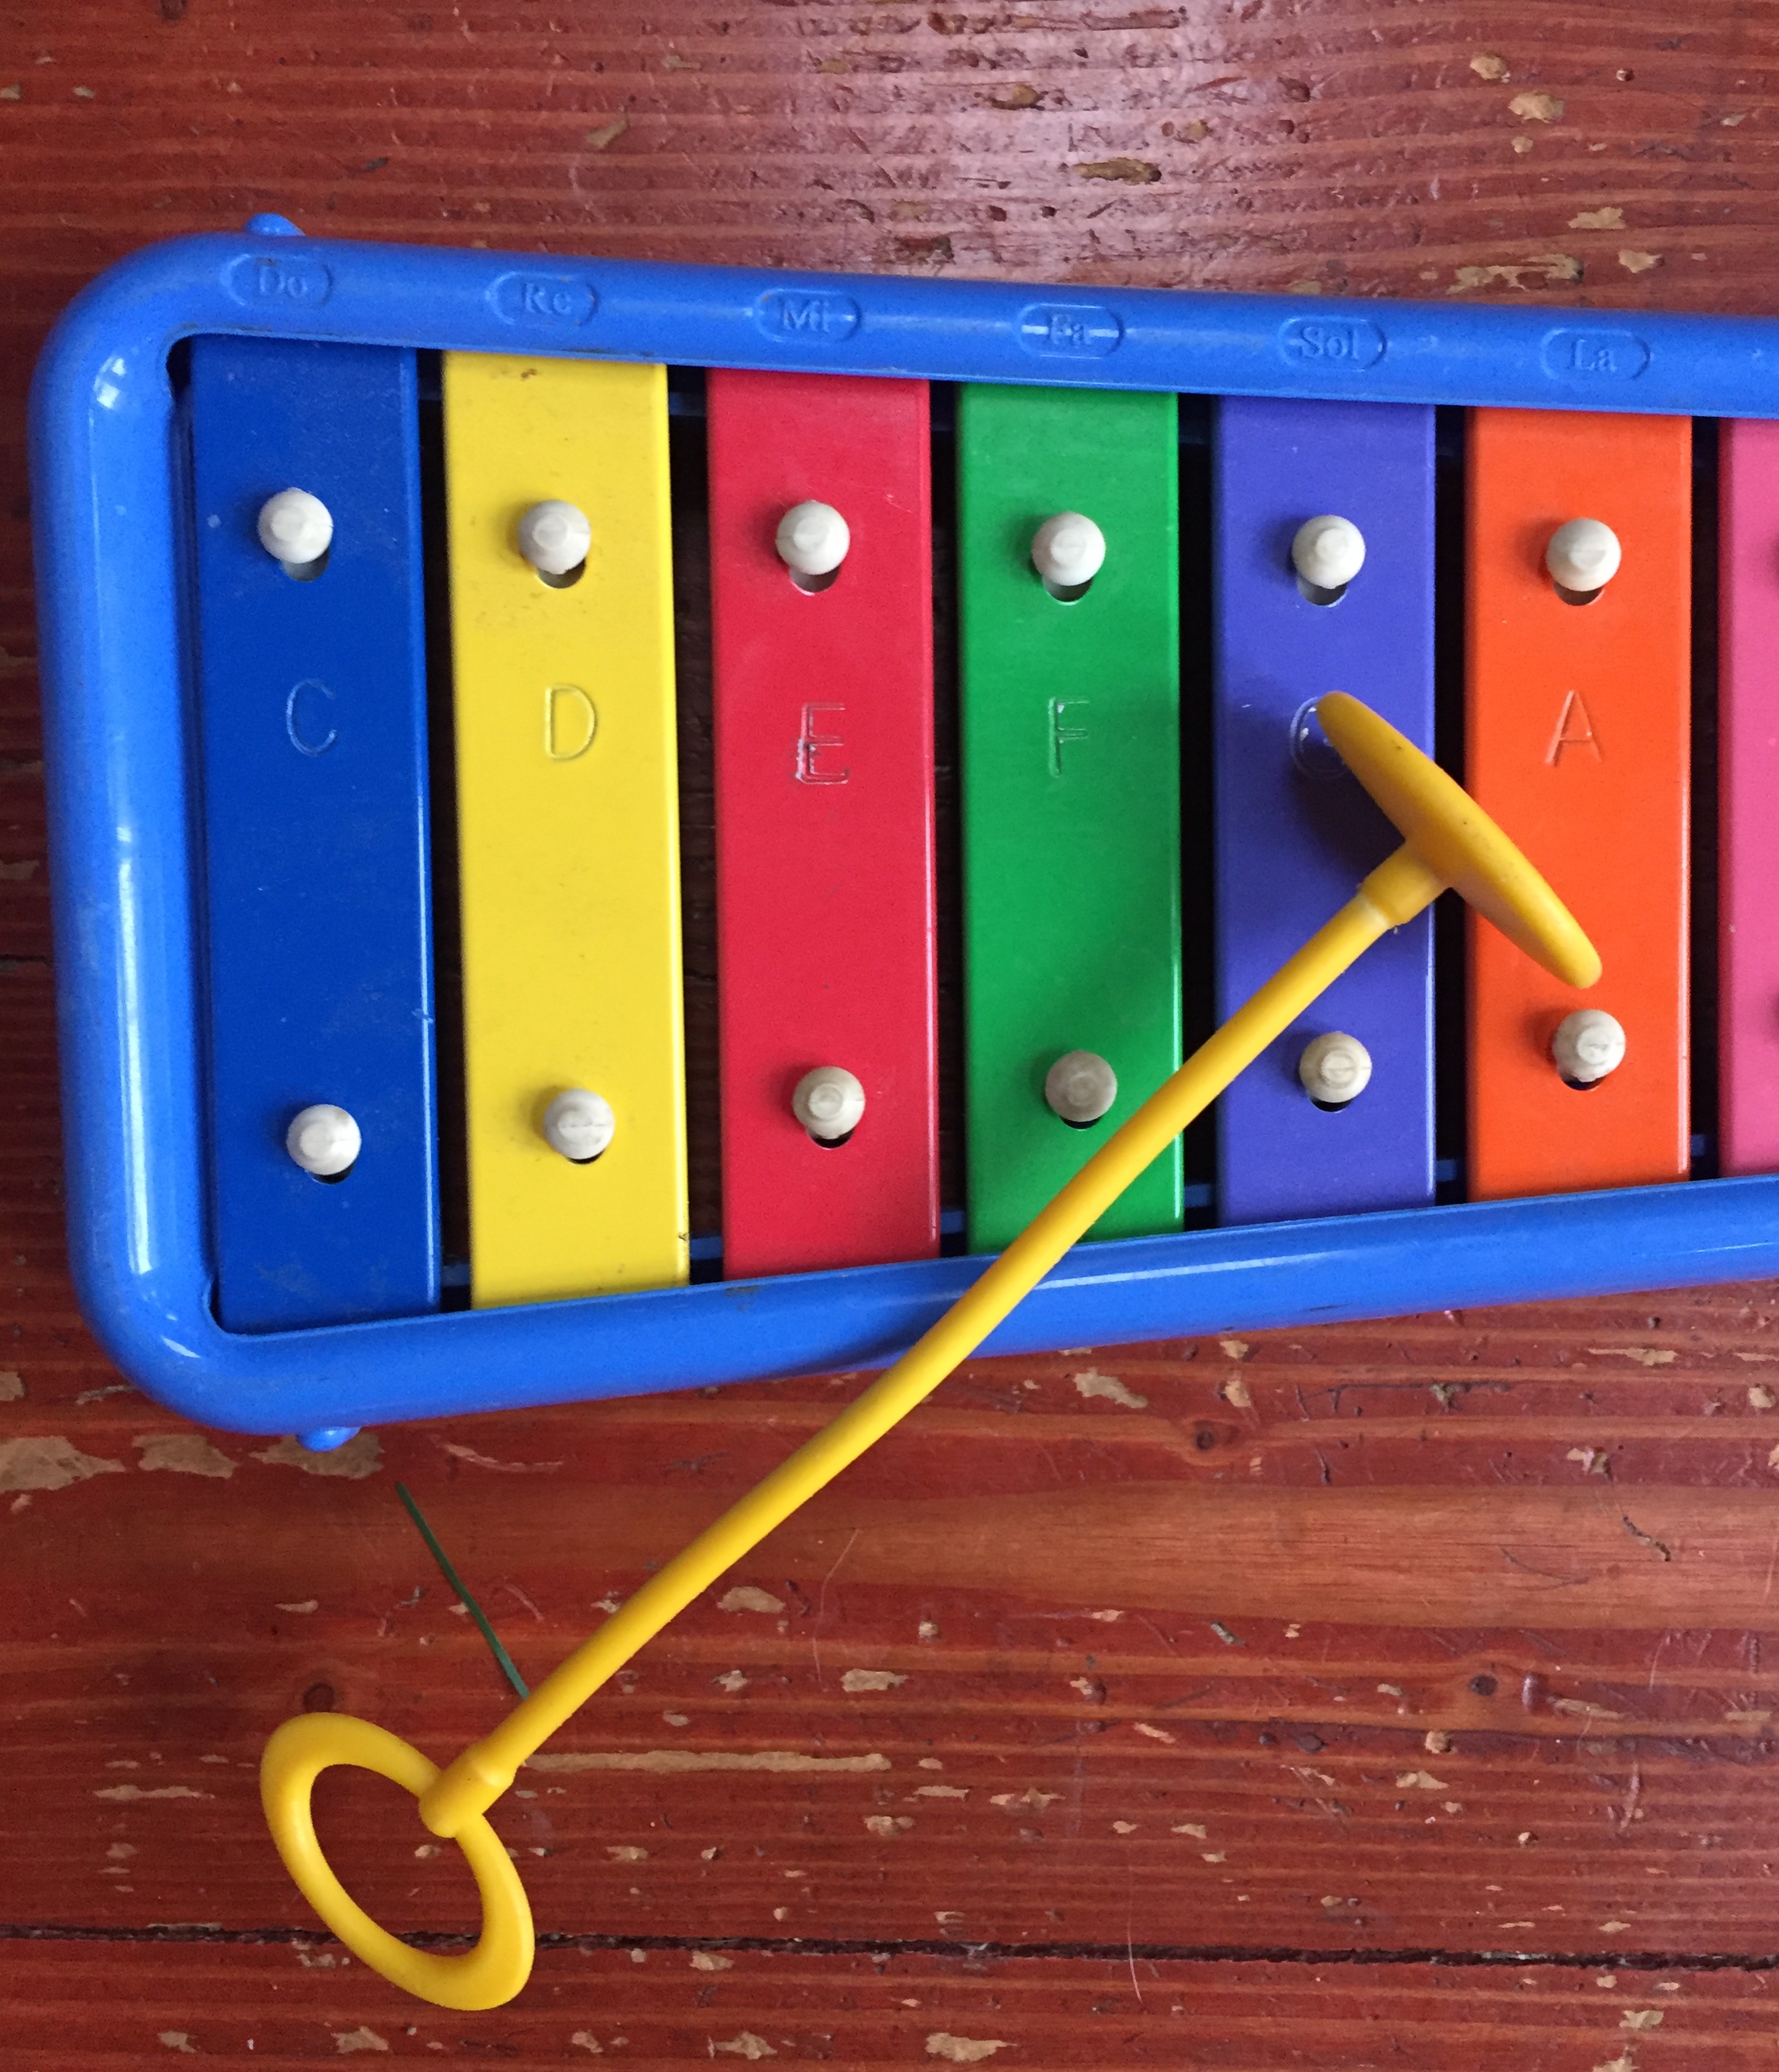 Xylophone Toy